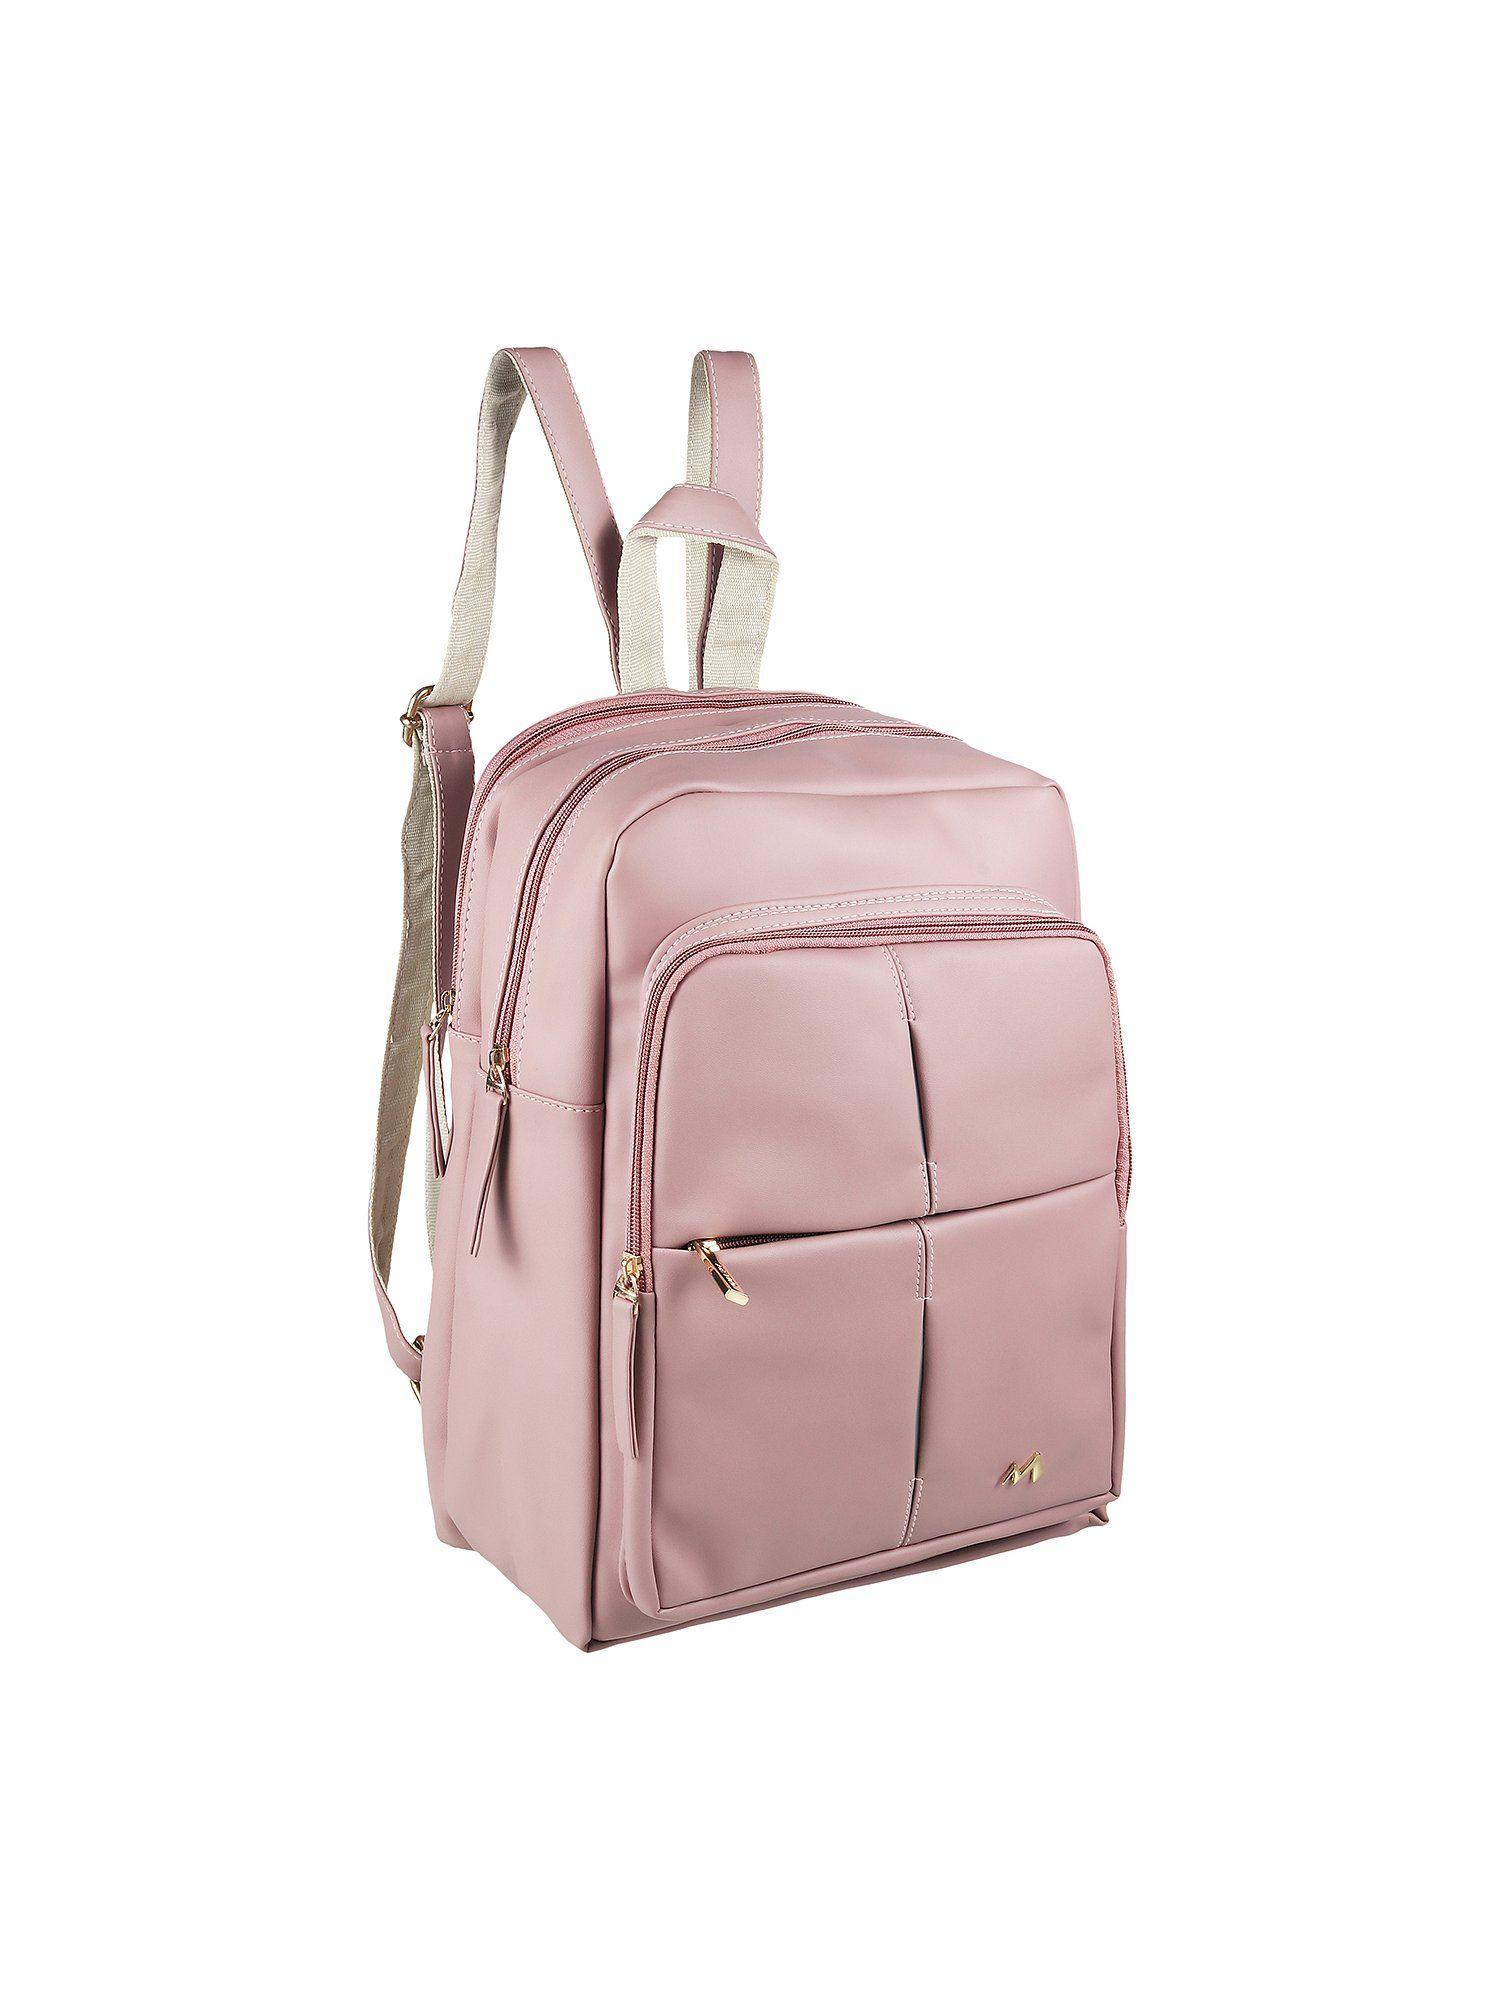 solid-plain pink backpacks